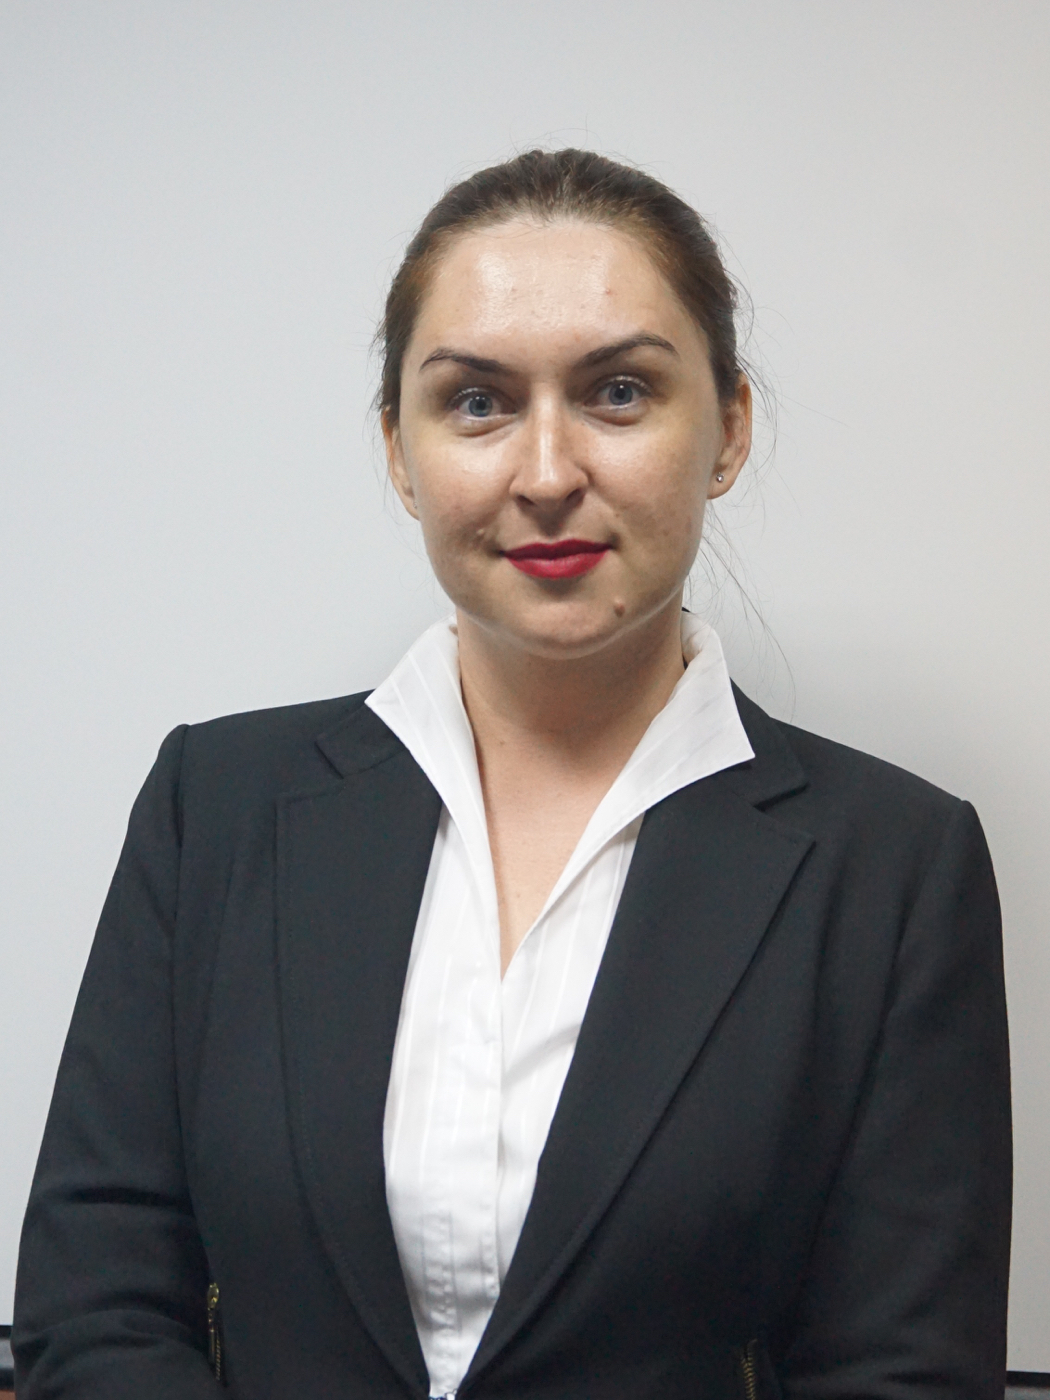 Никулина Светлана Владимировна — Директор Департамента стратегического развития и маркетинга Банк SIAB